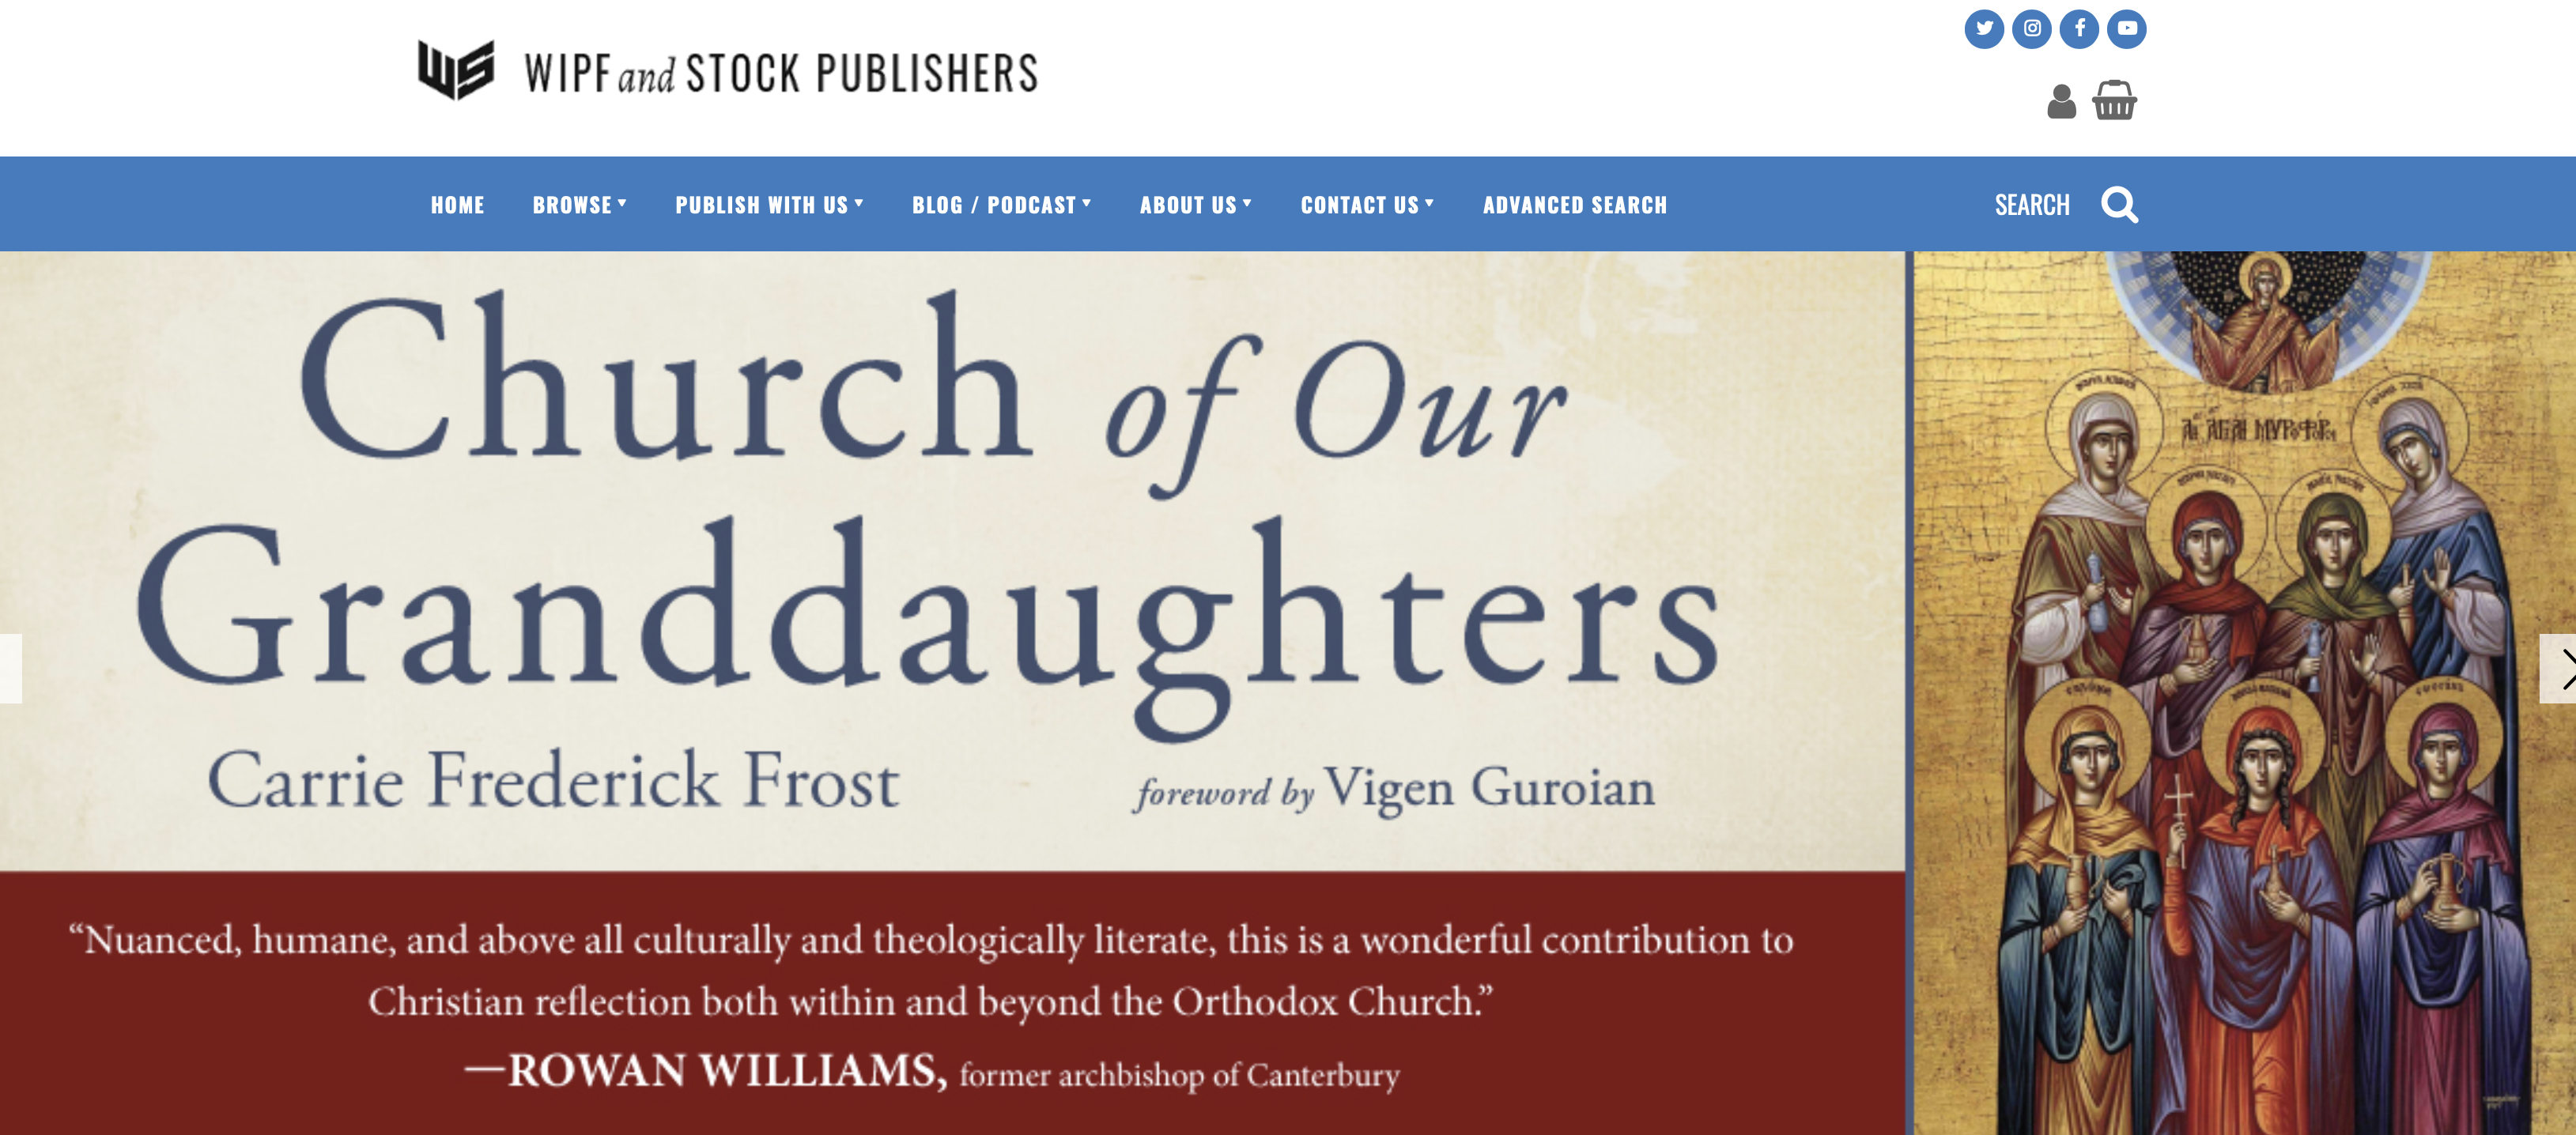 wipf stock publishers christian book publishers 